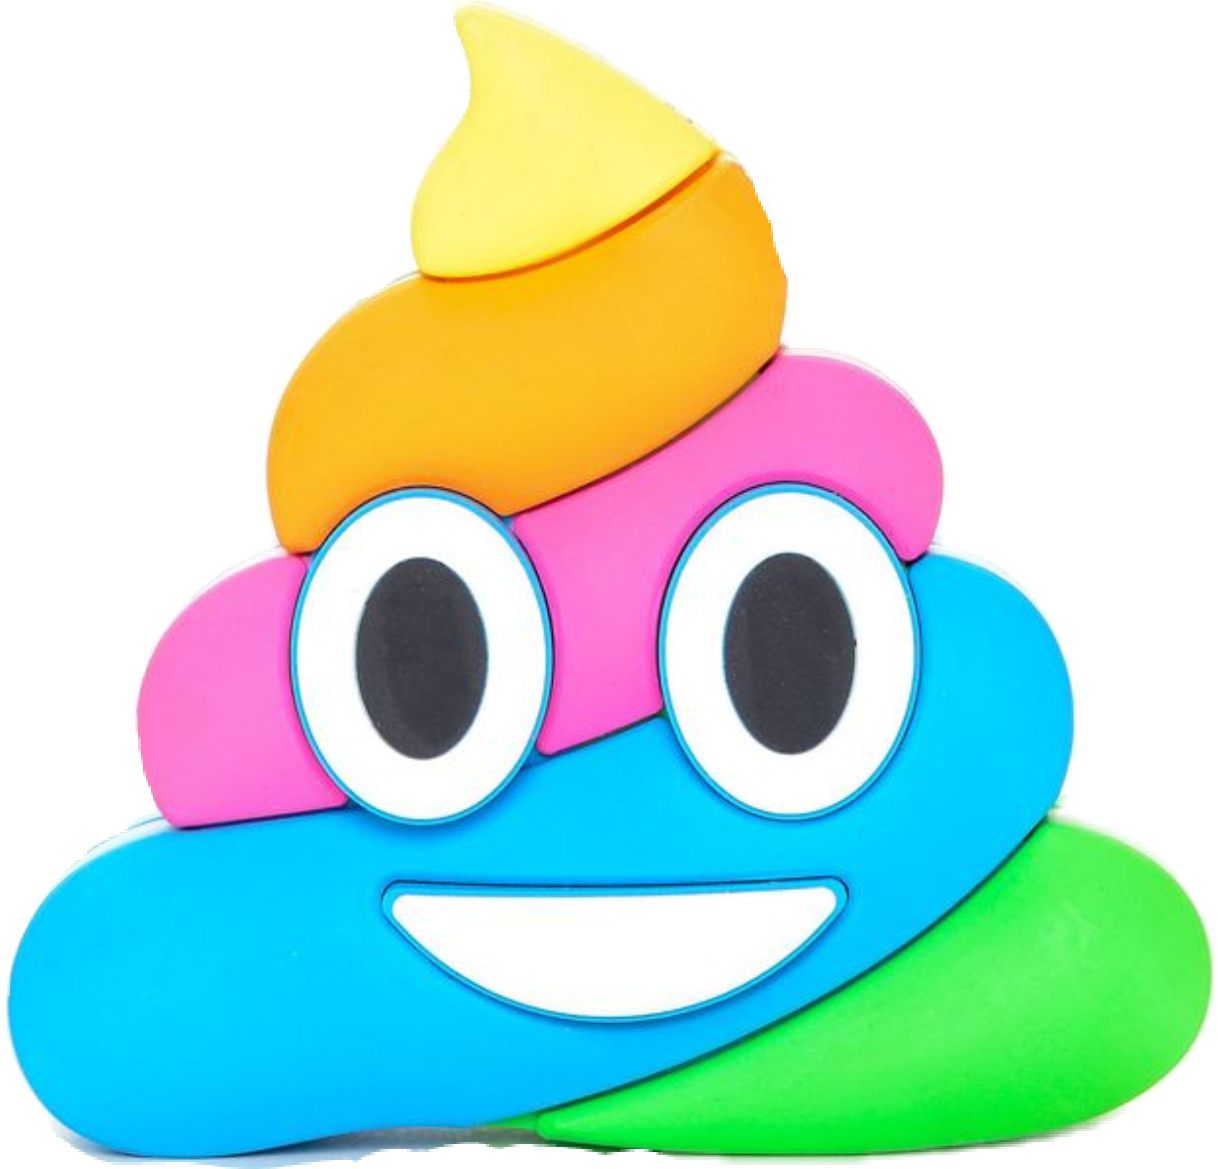 Vecteur Poop Emoji PNG image Transparentee